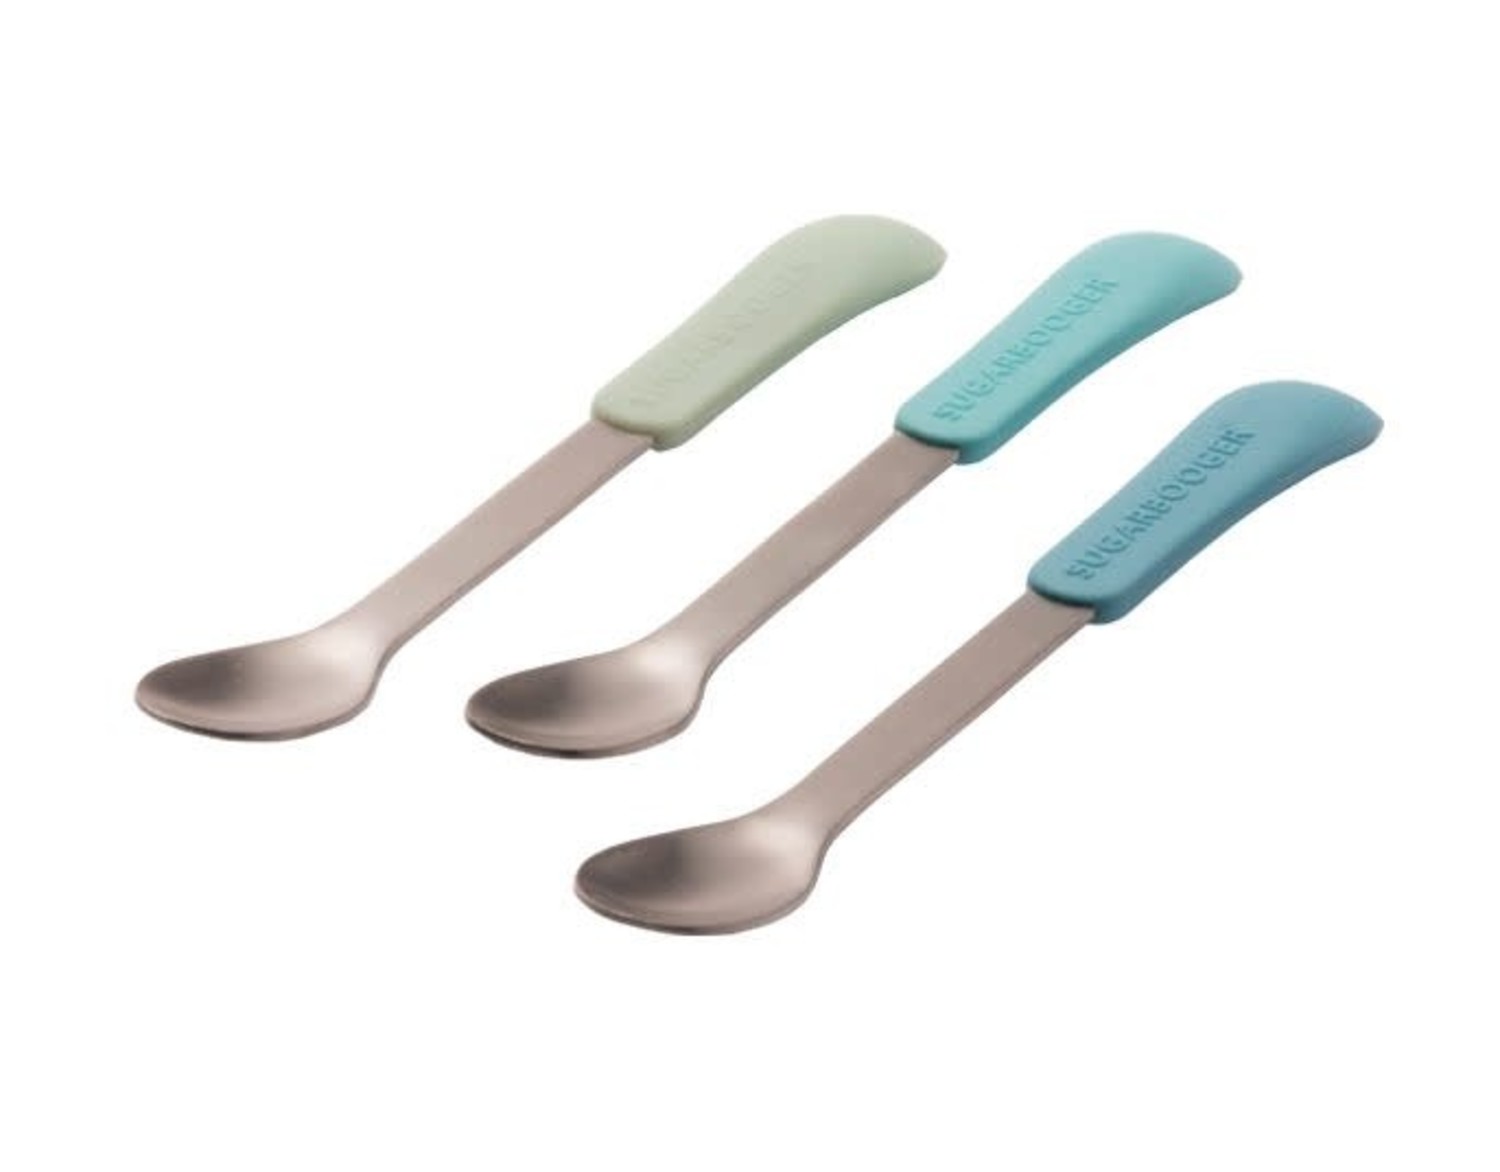 Baby Feeding Spoons, set of 4 - Whisk